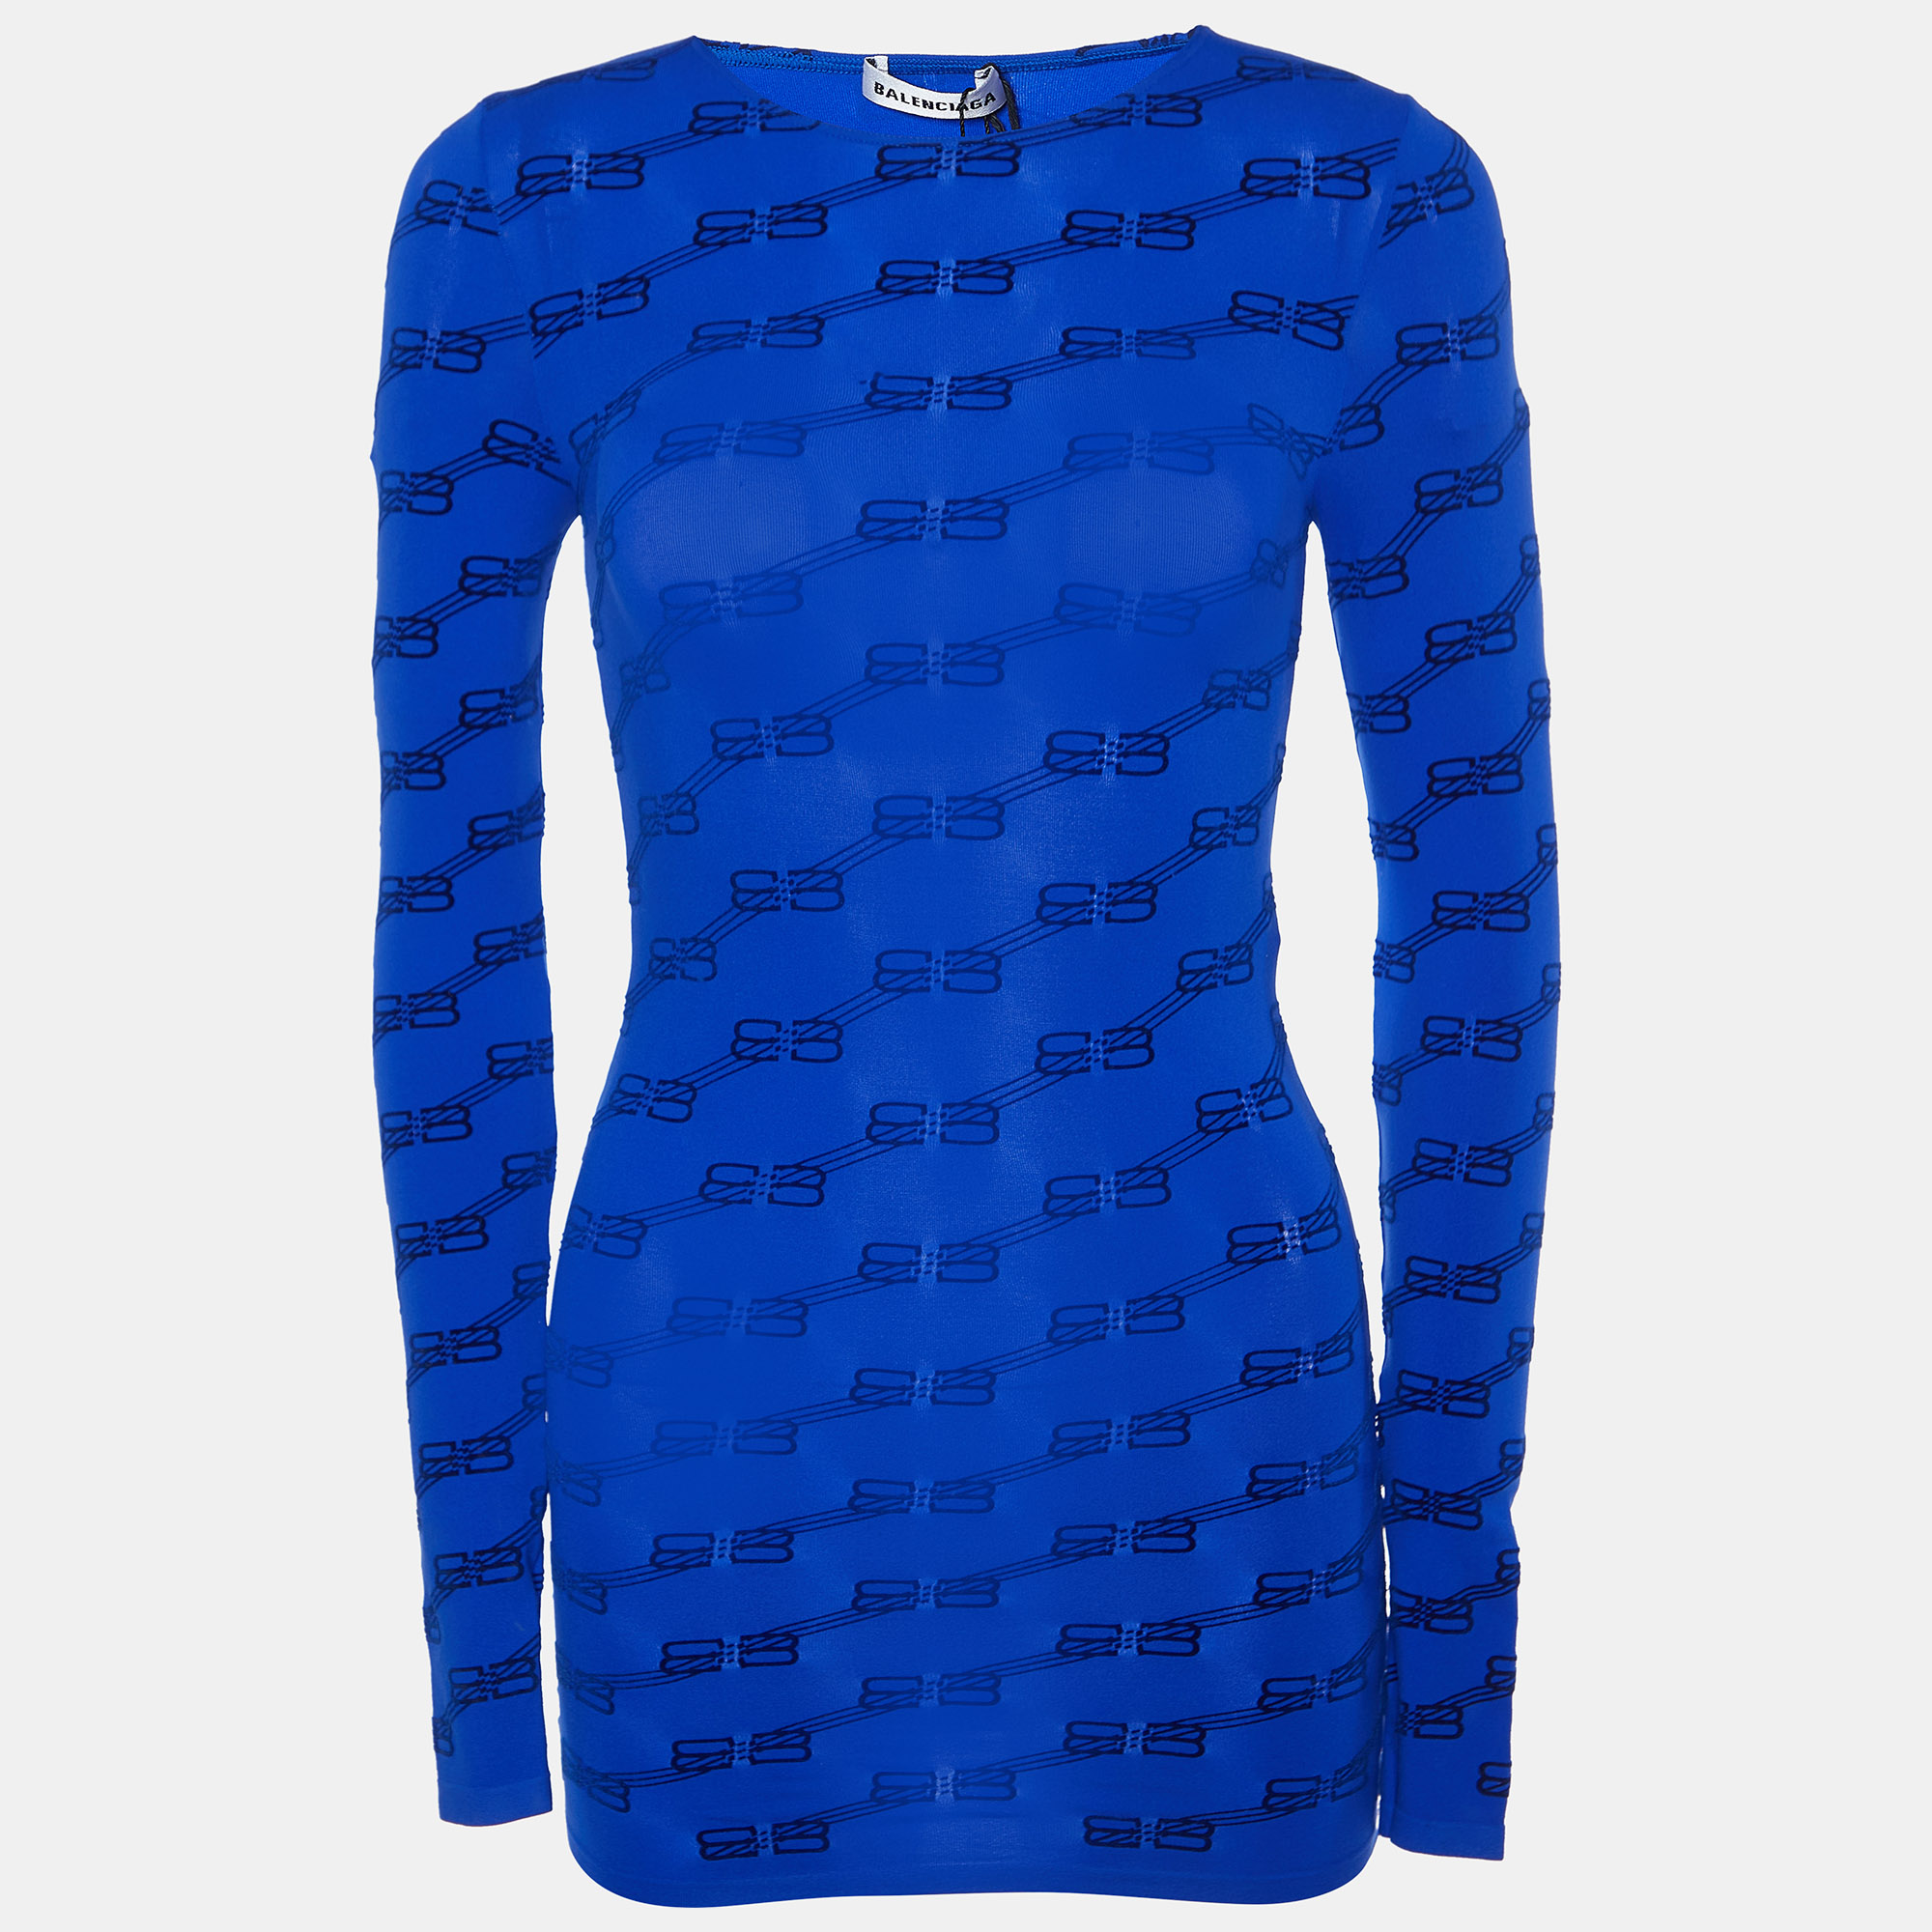 Balenciaga blue monogram stretch knit top s